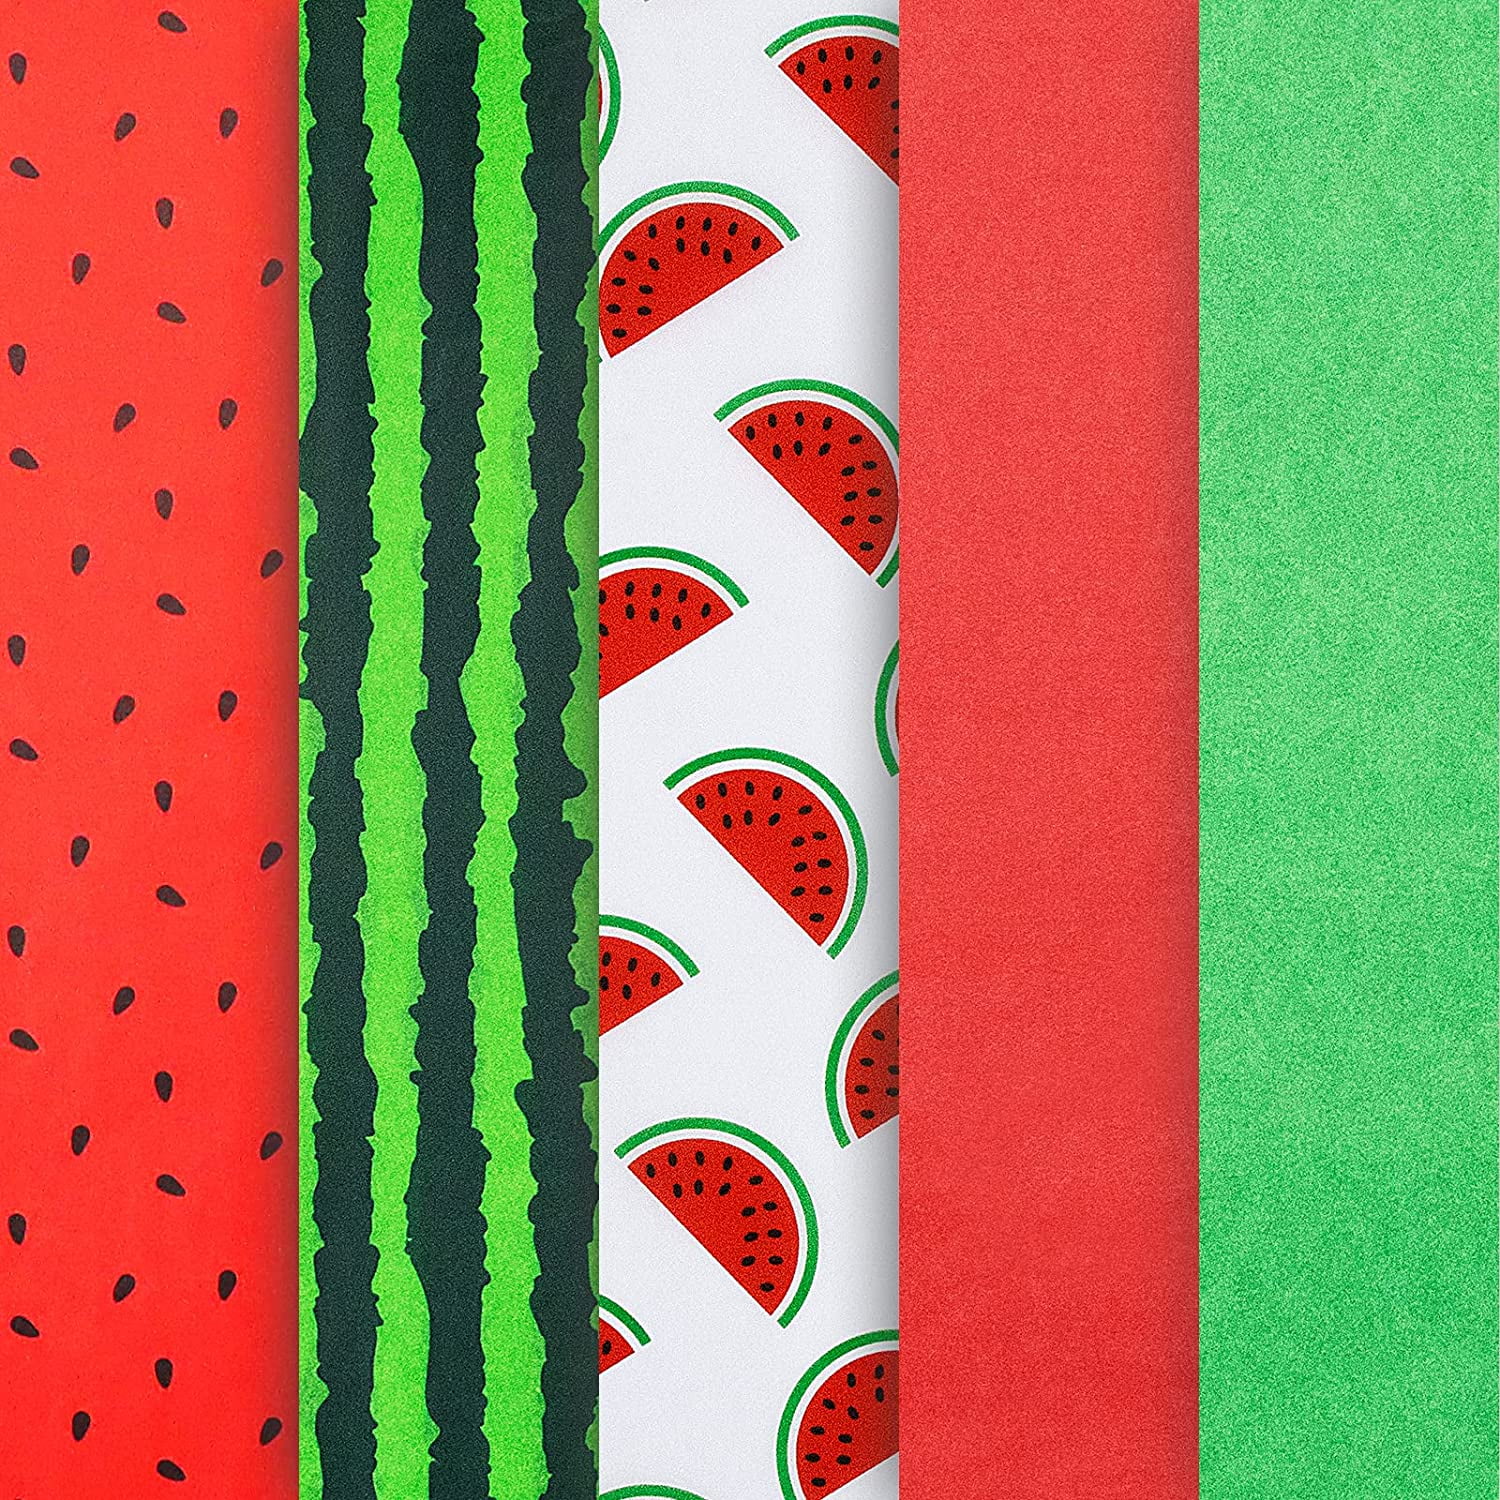  Hi Sasara 100 Sheets Watermelon Tissue Paper Bulk,White with  Watermelon Pattern Tissue Paper for Gift Bags,Summer Tissue Paper for  Watermelon Party,14 x 20 inch : Health & Household